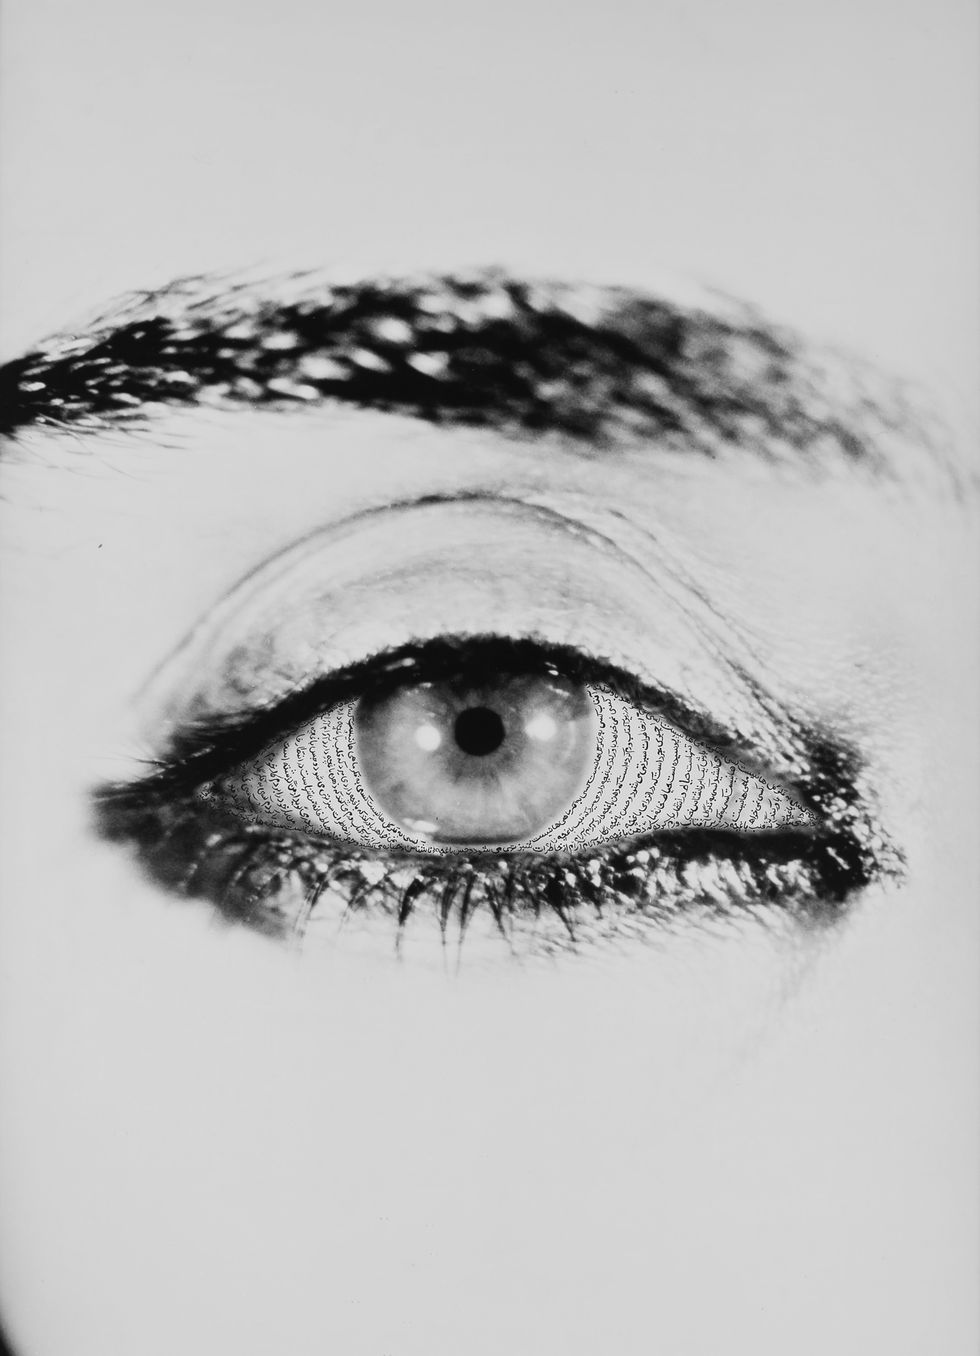 Shirin Neshat, Offered Eyes, fotografia, calligrafia farsi, donne musulmane